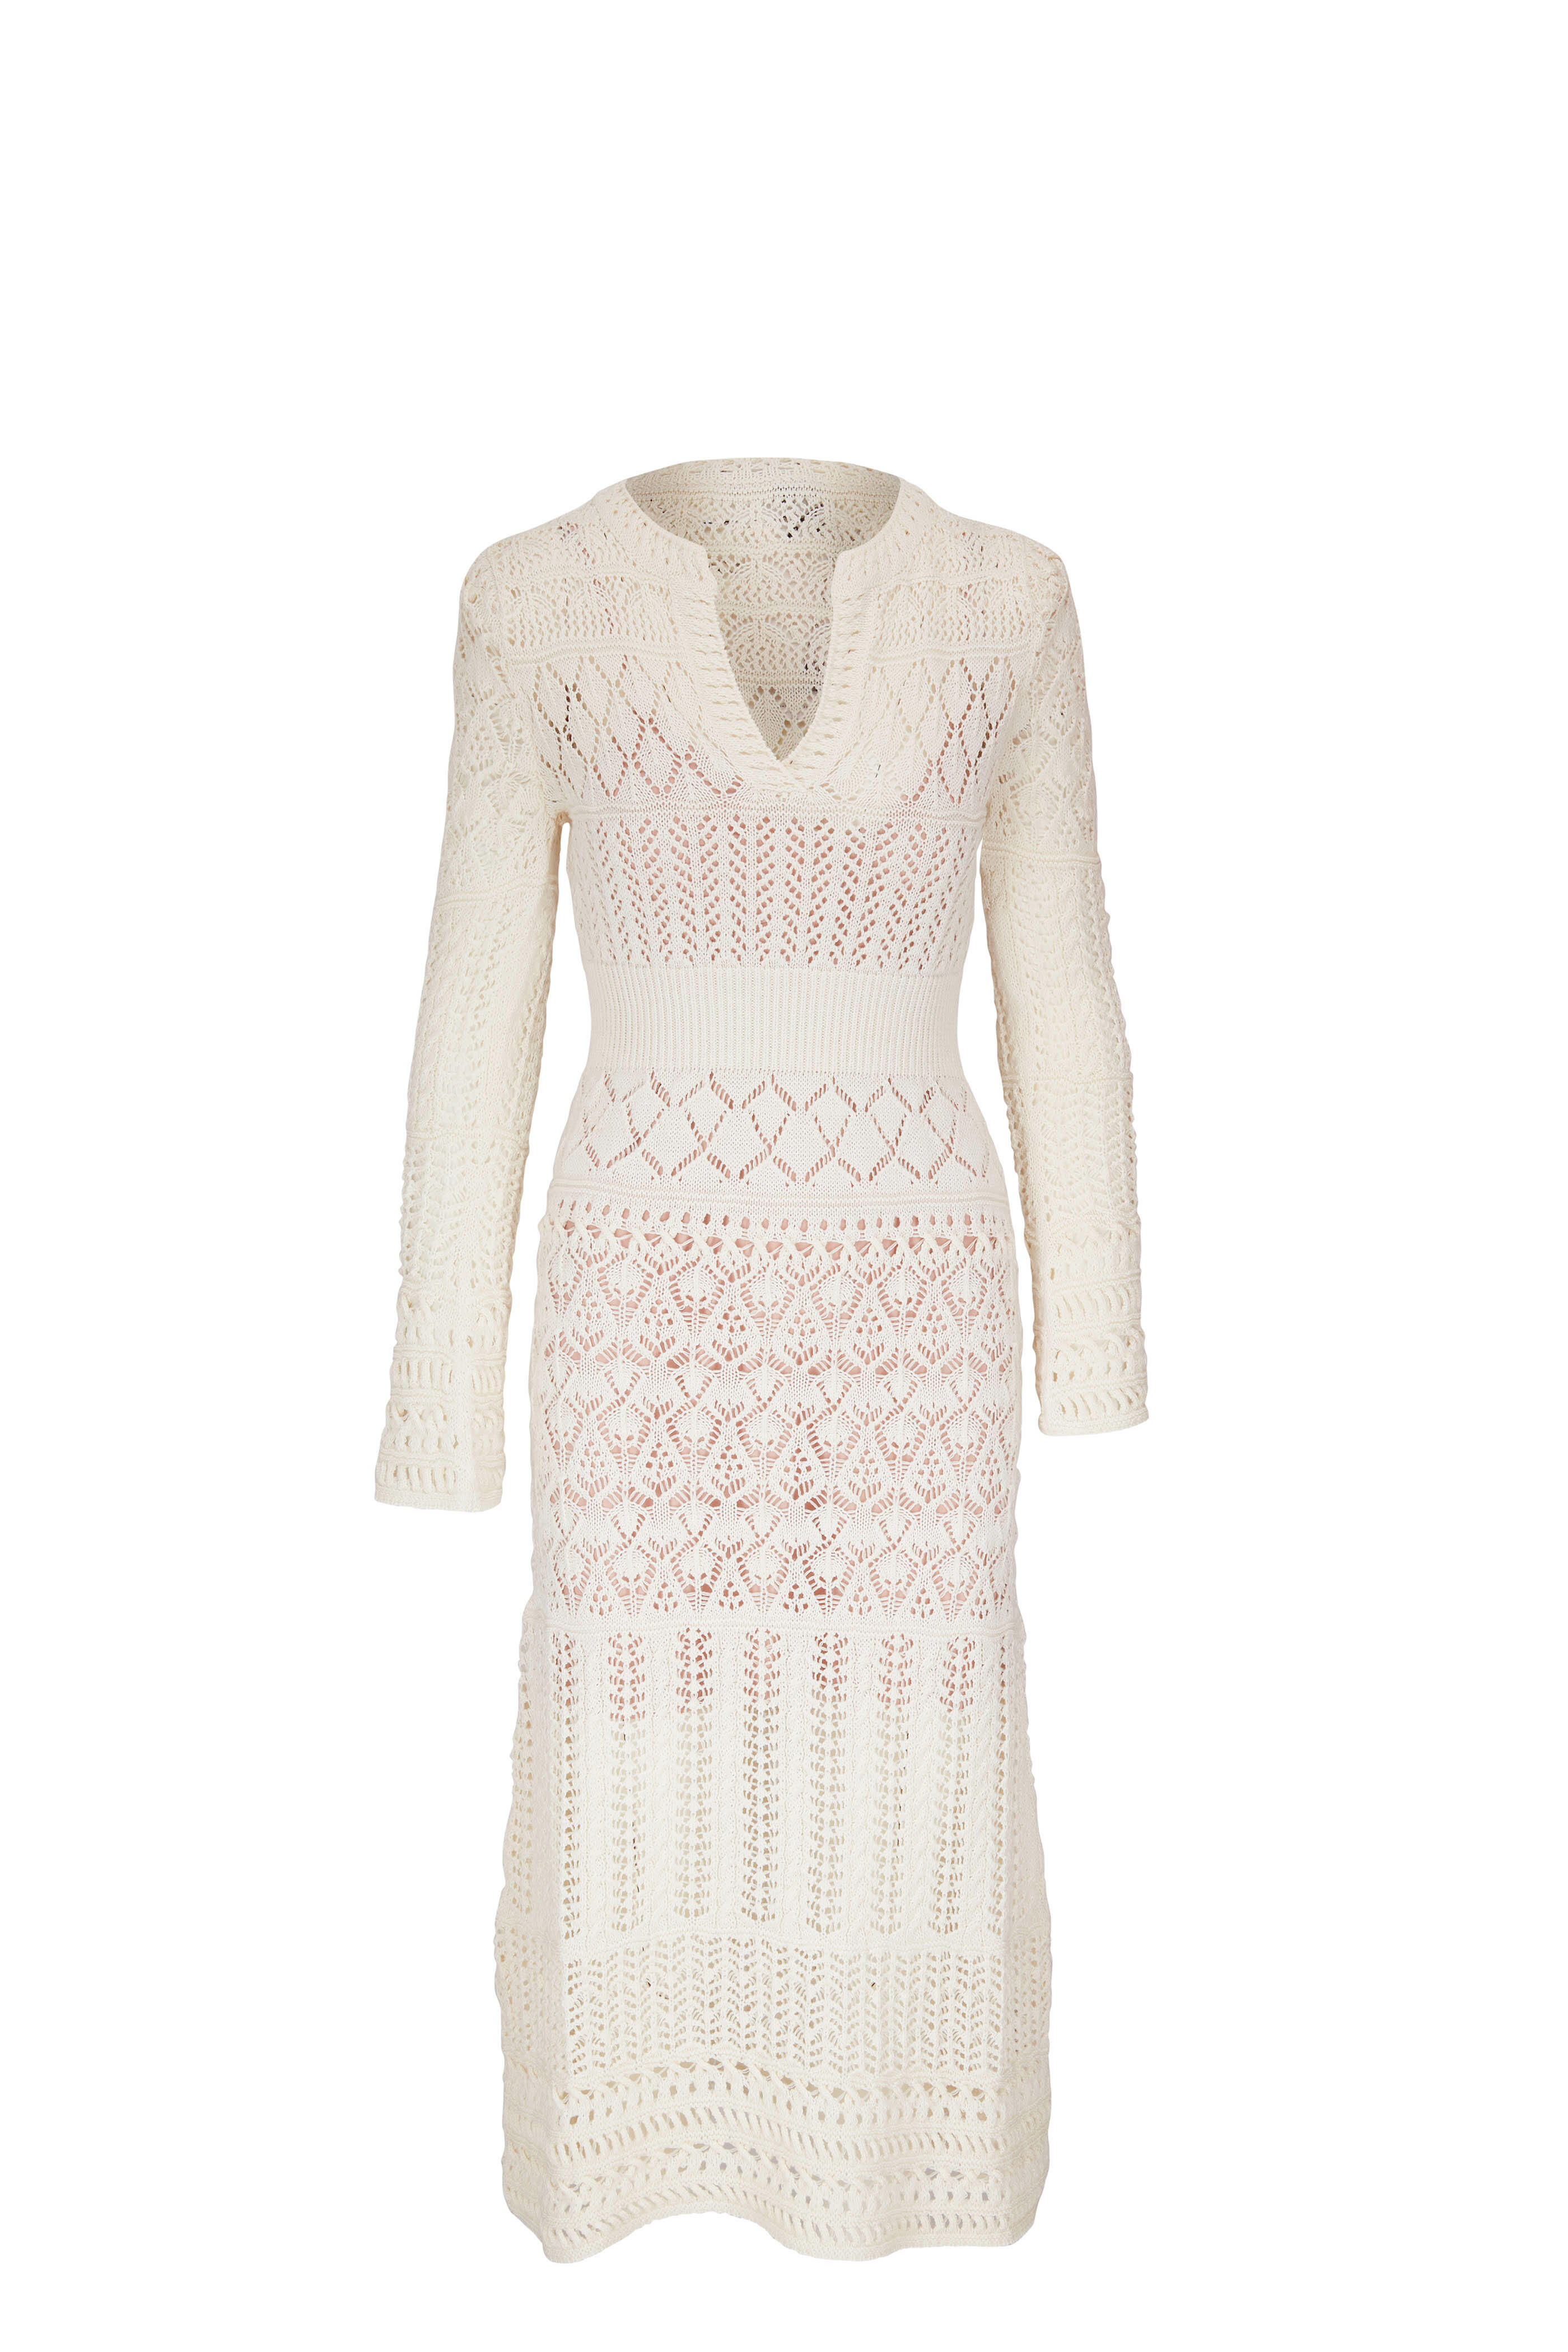 Dorothee Schumacher - Seductive White Lace Midi Dress